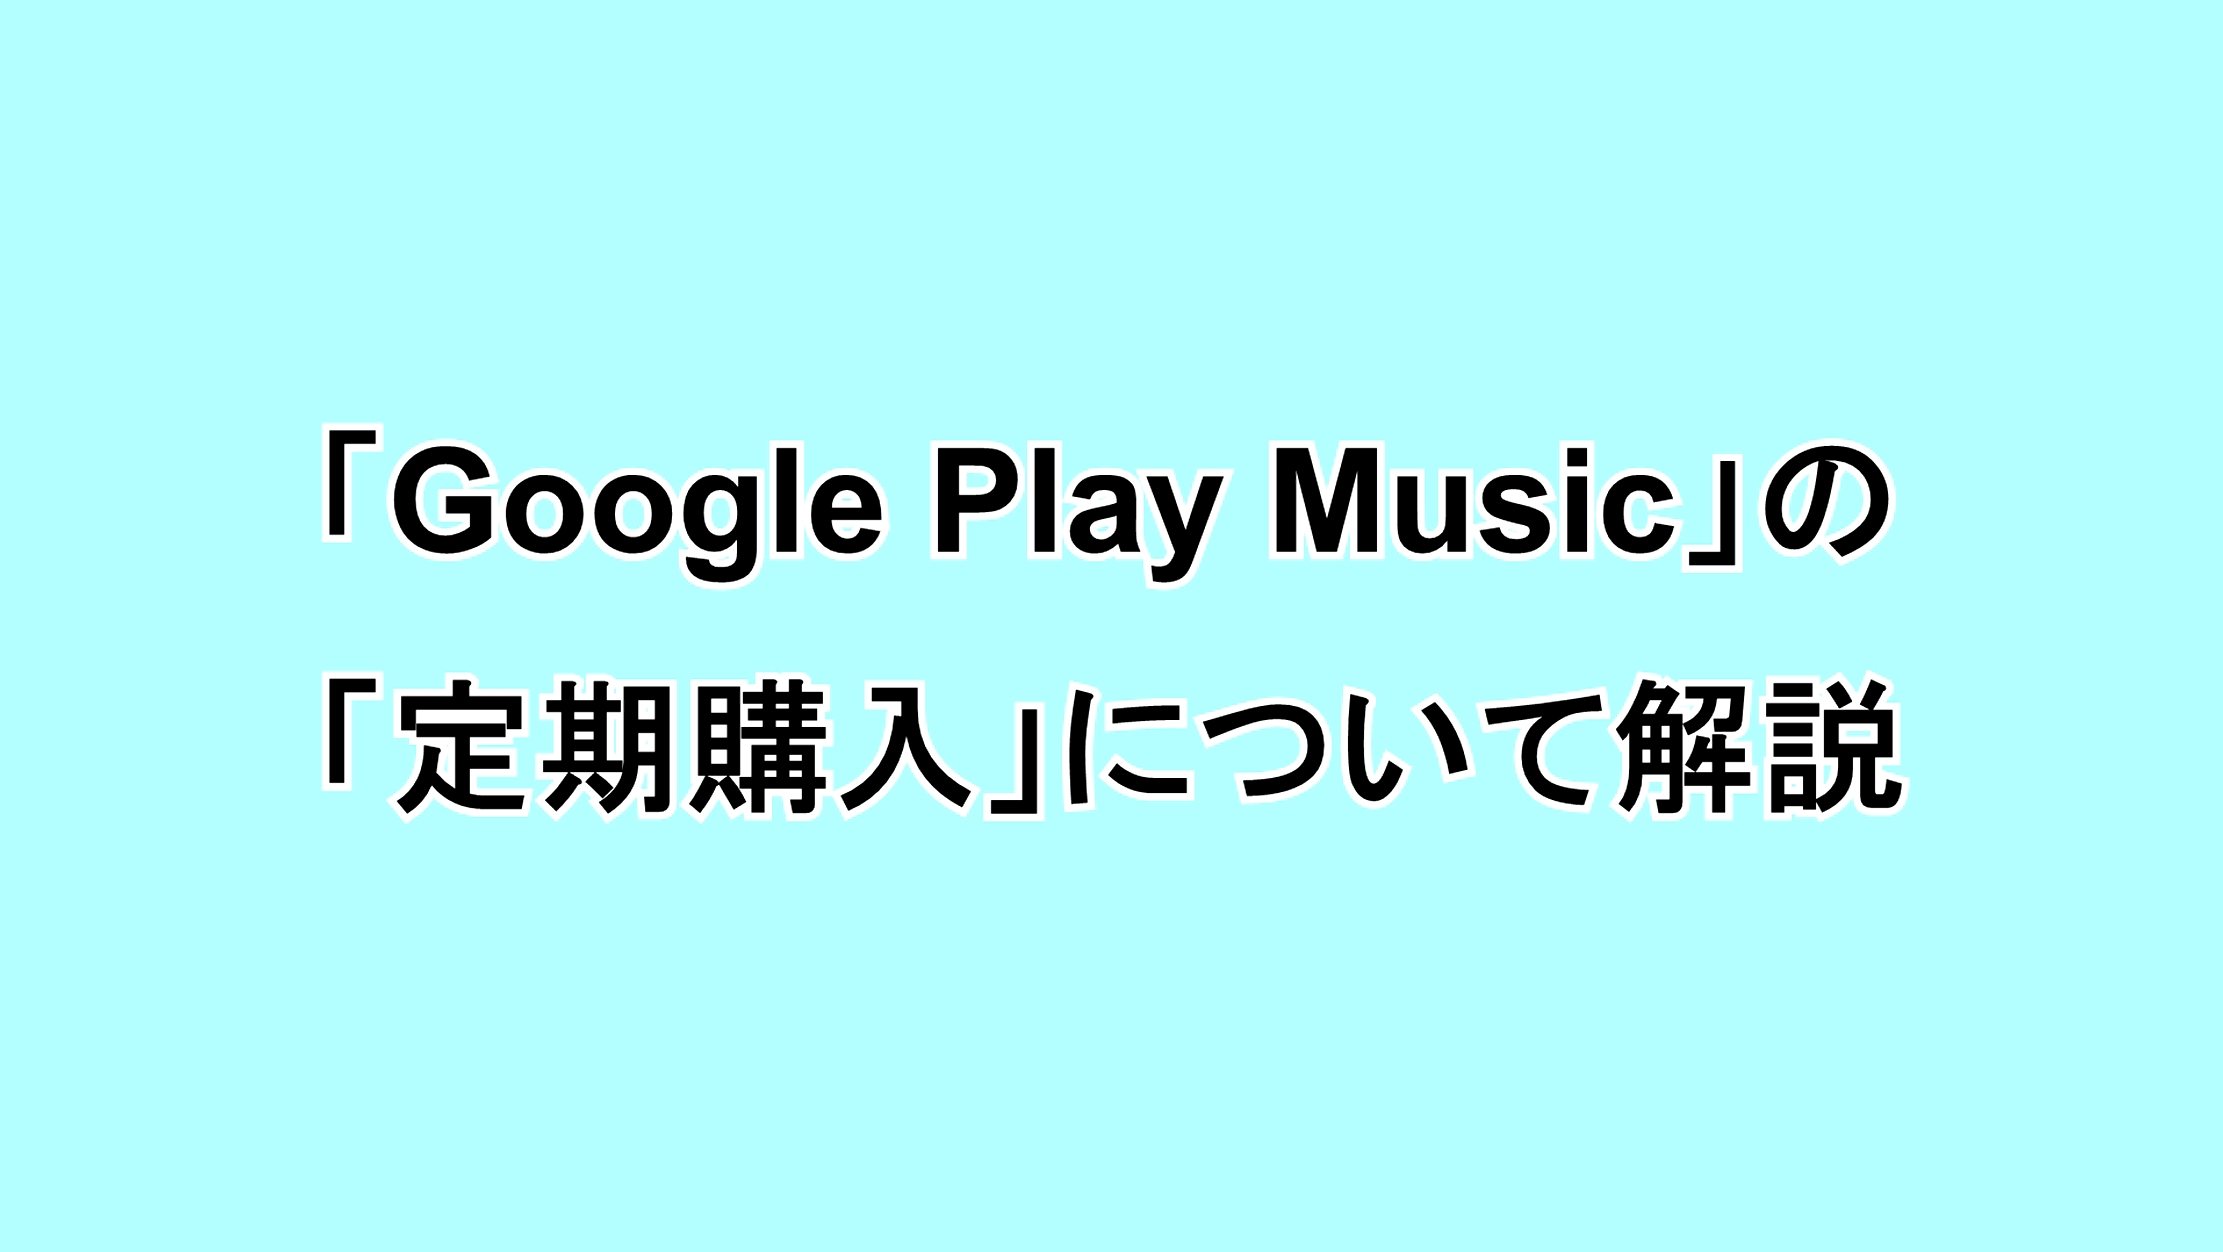 「Google Play Music」の有料機能“定期購入”について解説